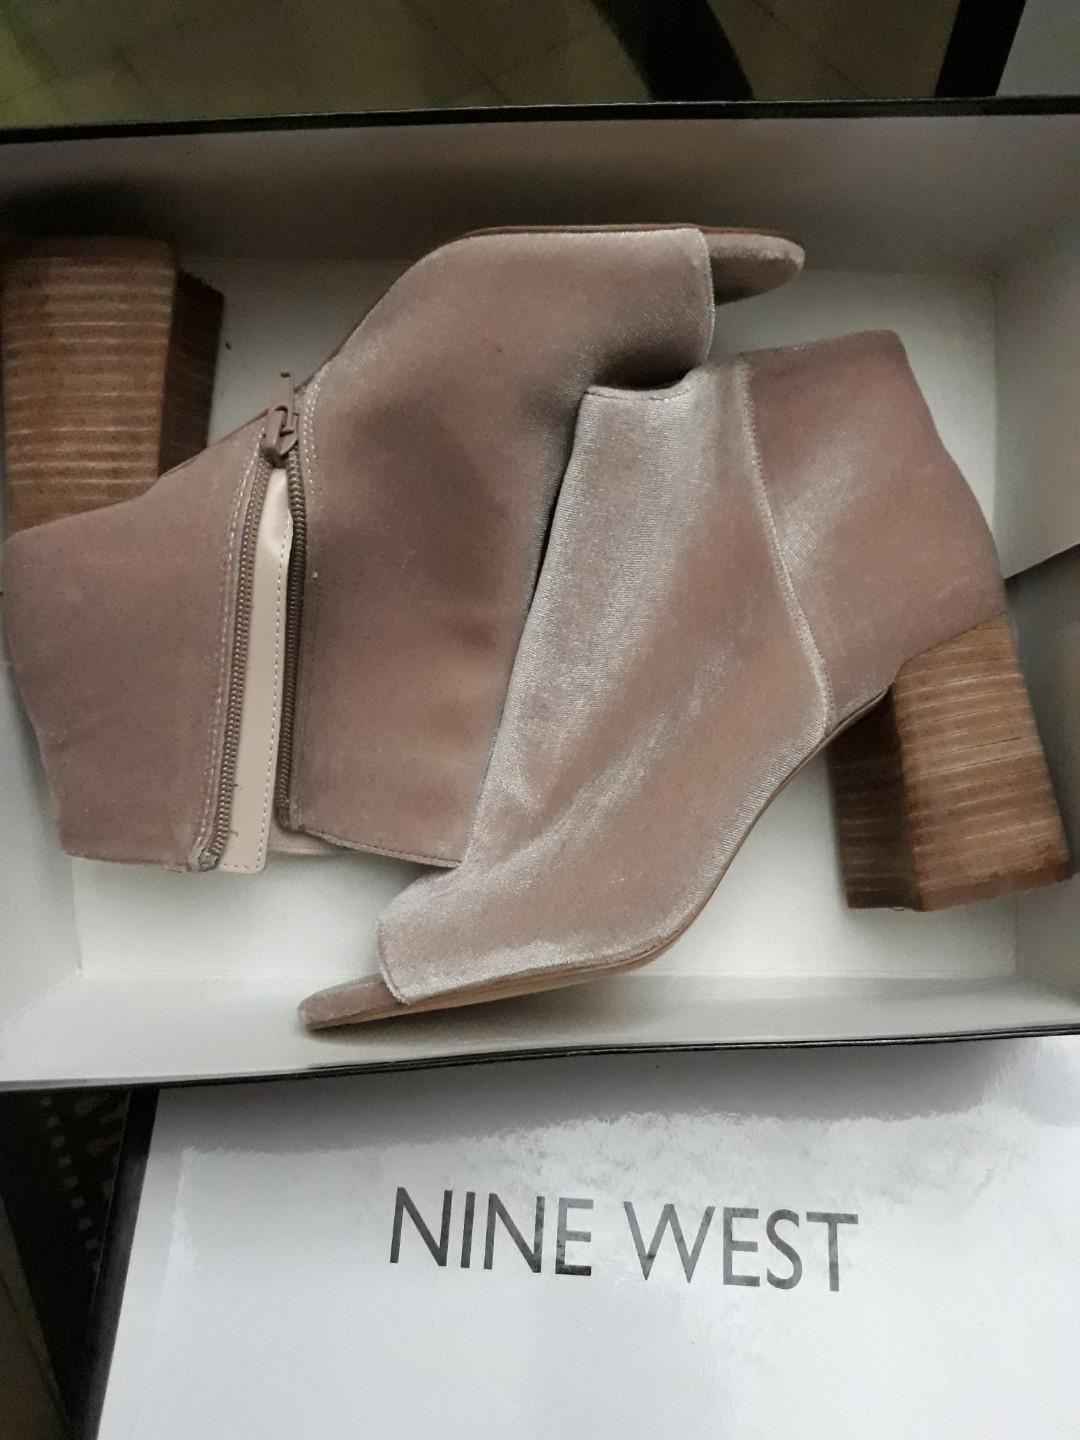 nine west shoes clearance sale